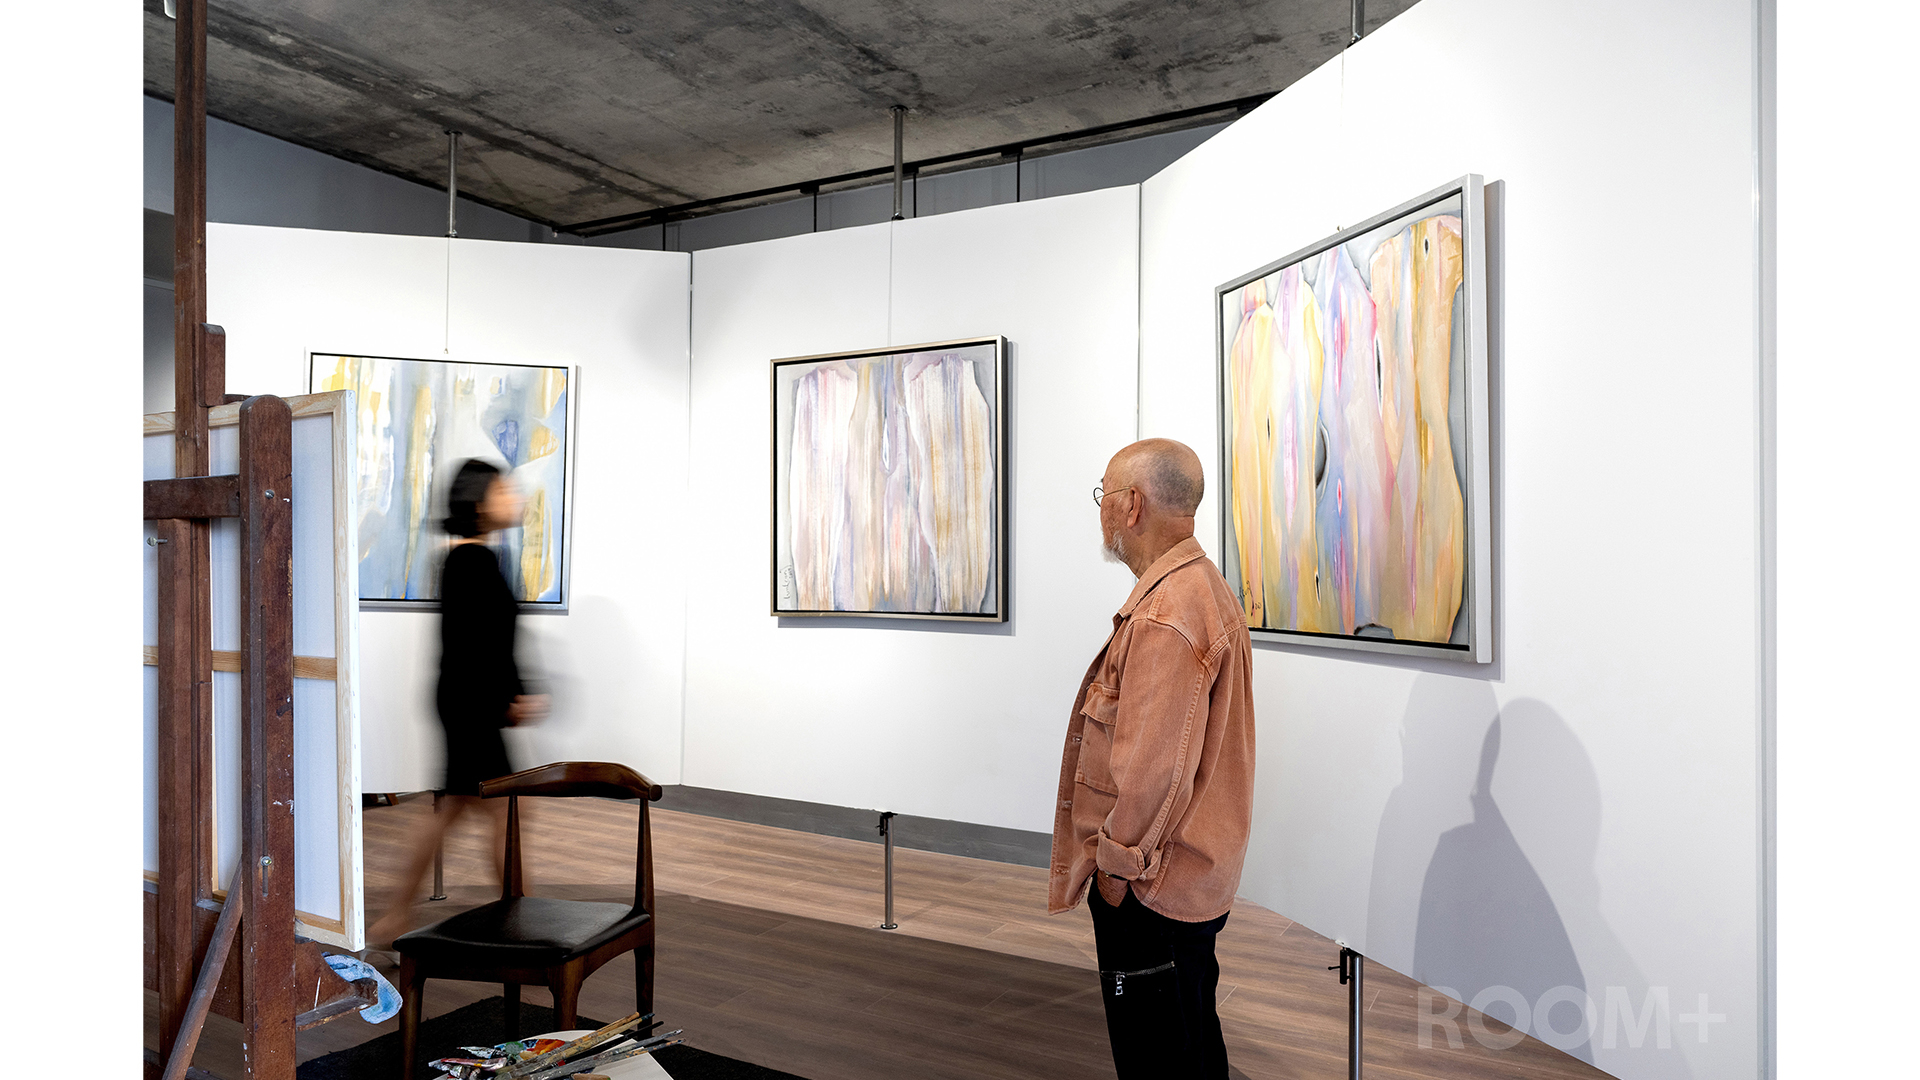 ROOM+ Trịnh Cung Gallery - Studio (4)